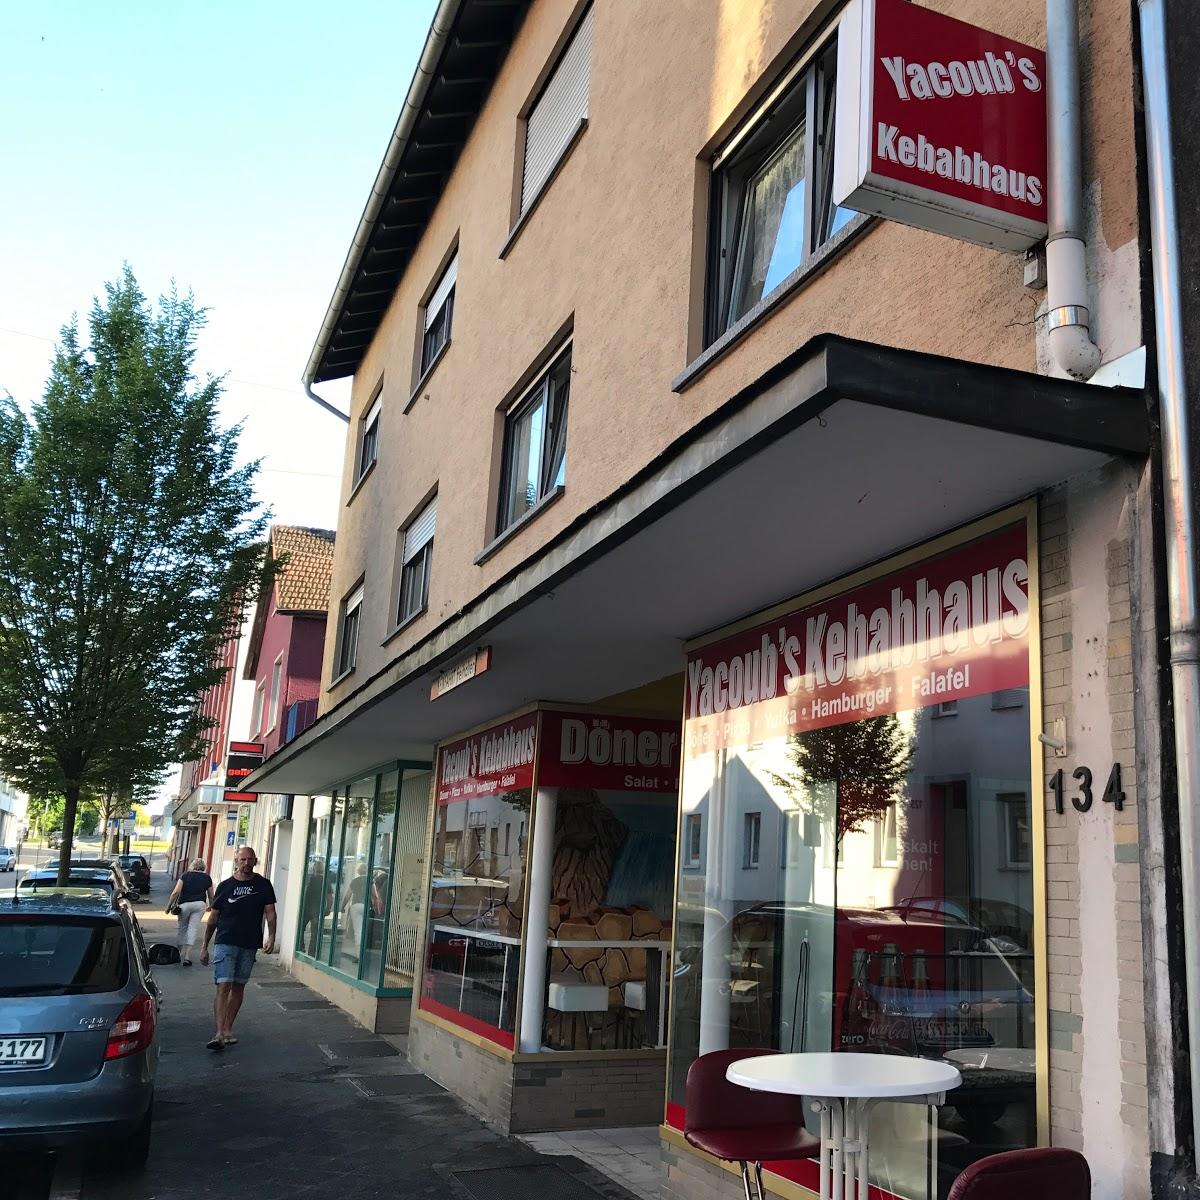 Restaurant "Yacoubs Kebabhaus" in Wiesloch